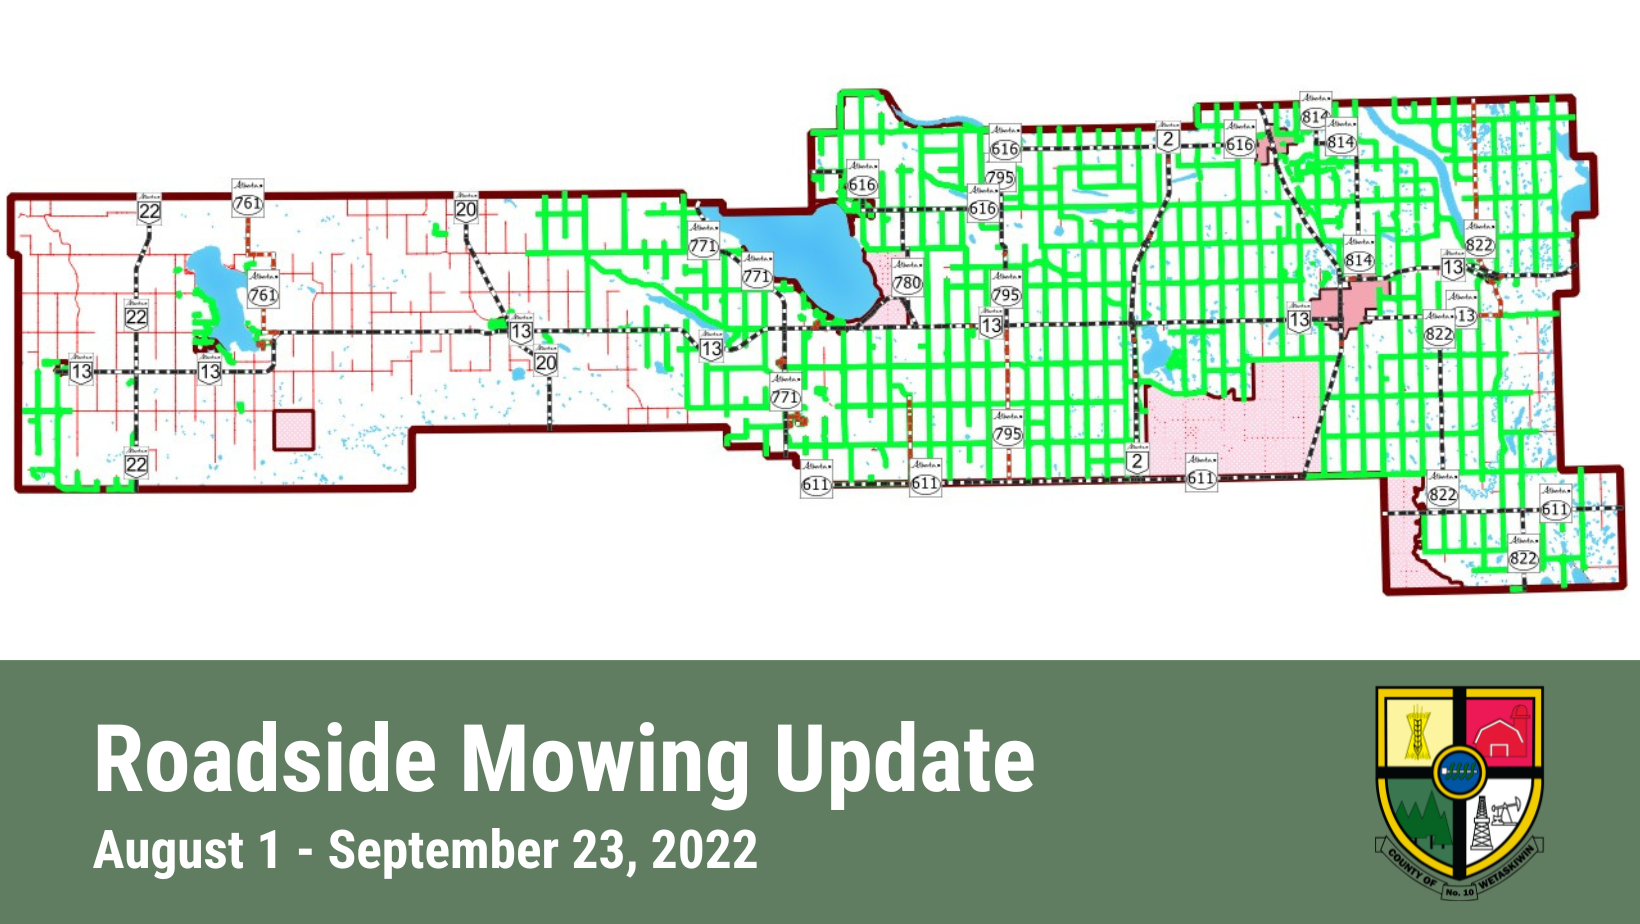 Roadside mowing update Sept 23